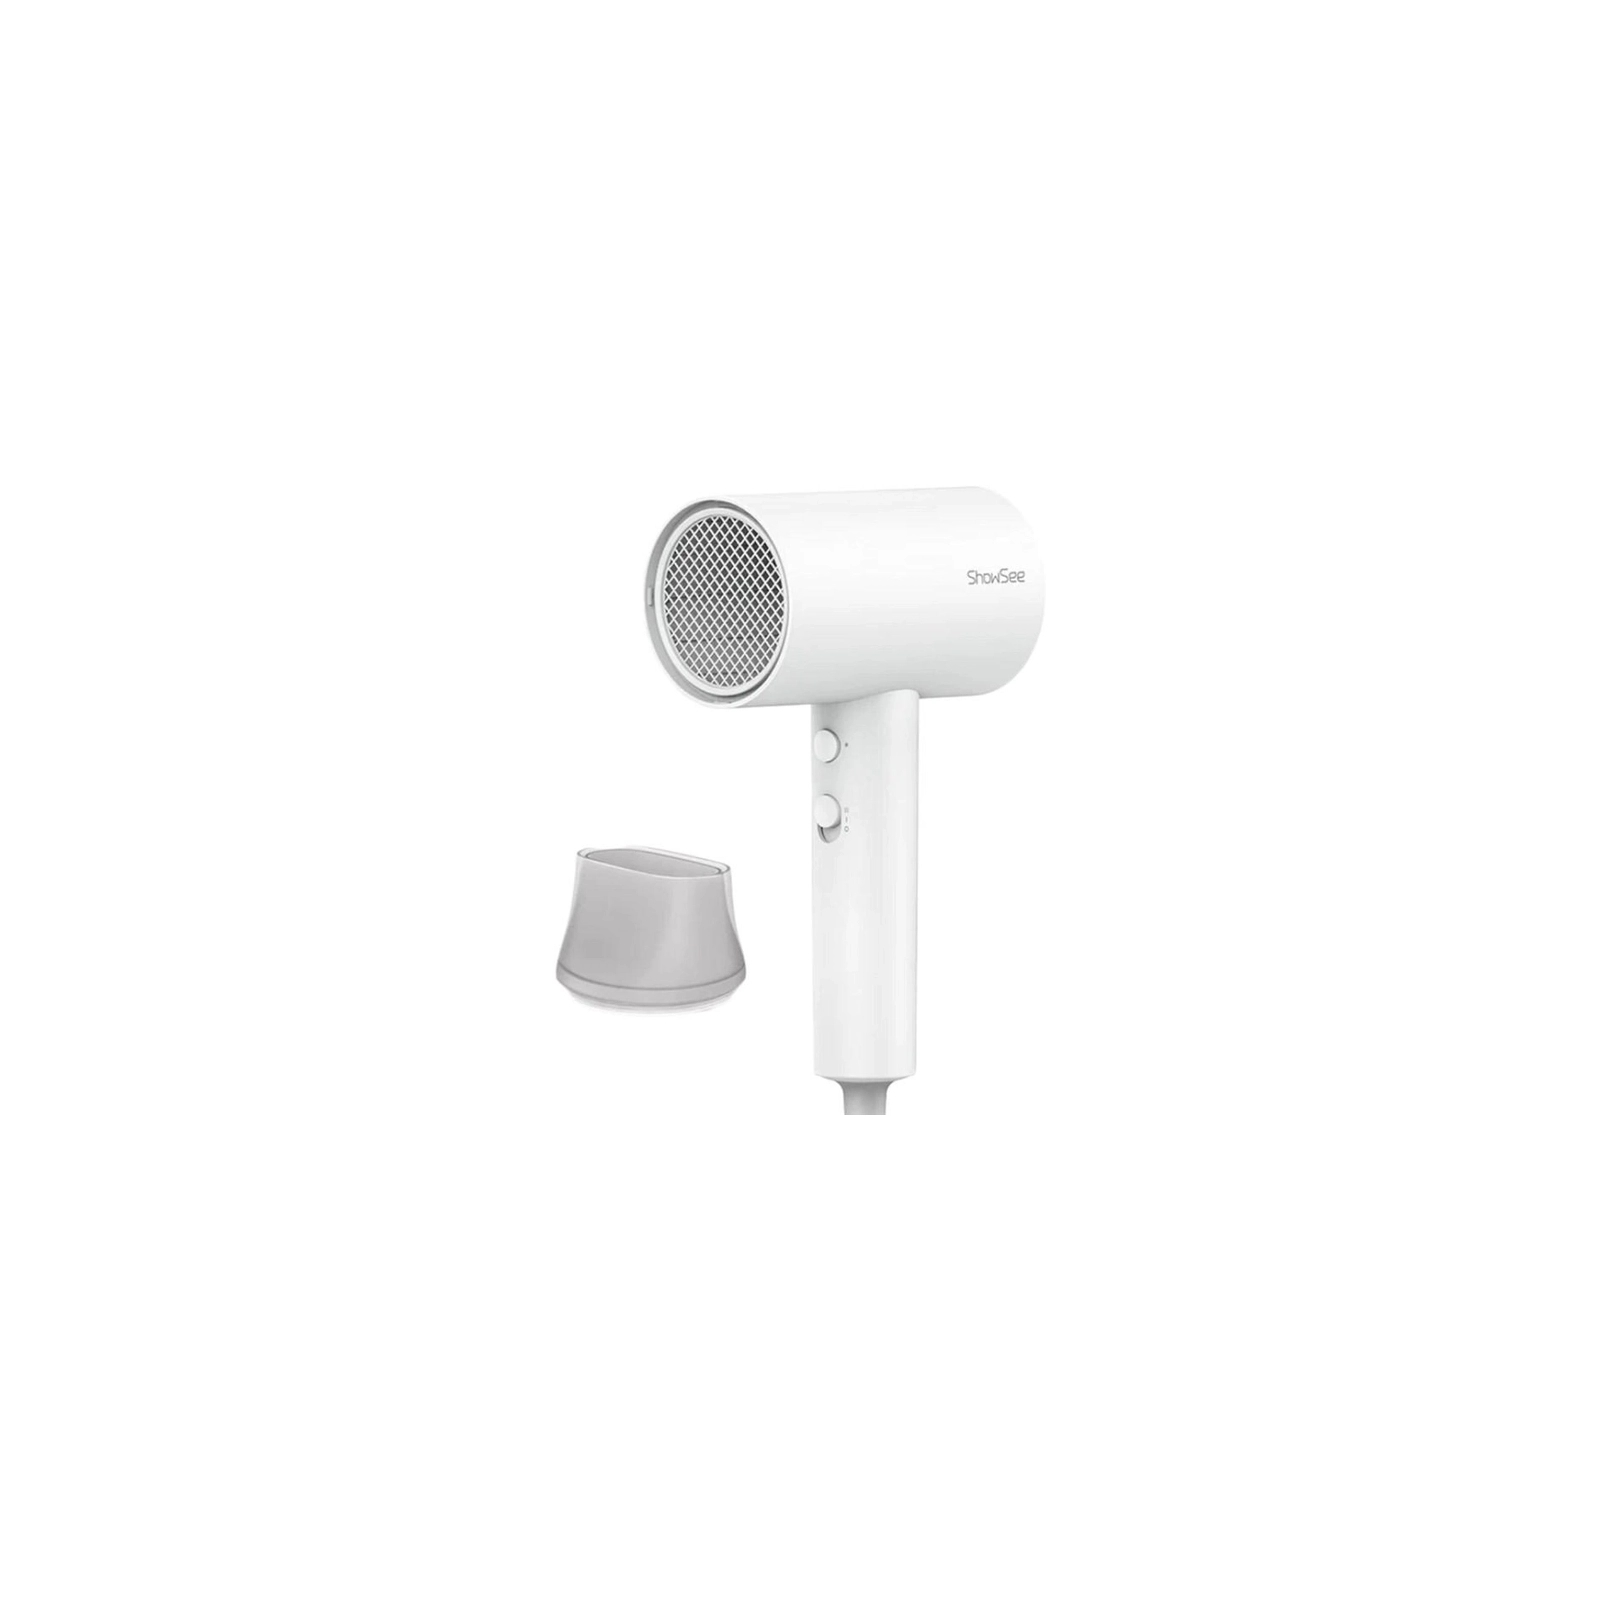 Фен Xiaomi ShowSee Hair Dryer A10-W 1800W White изображение 2